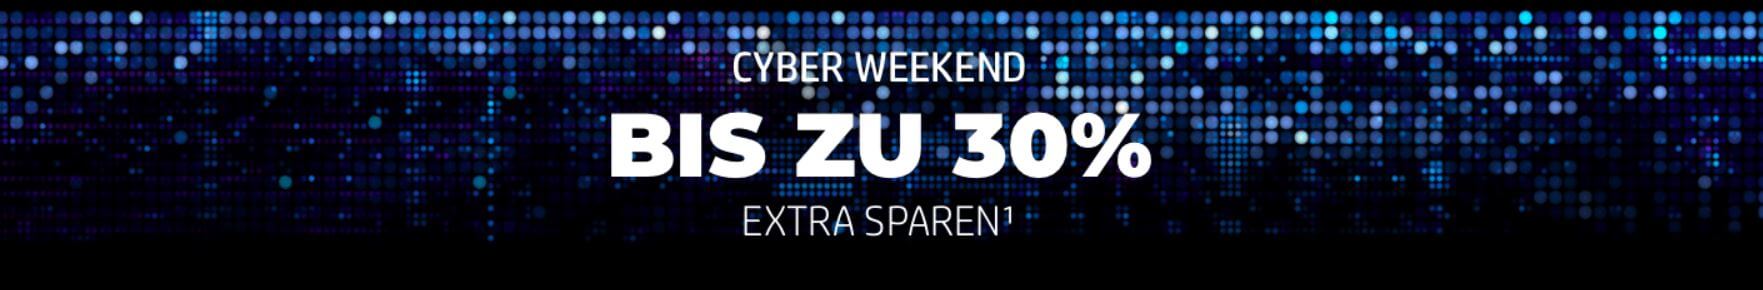 HP Cyber Weekend Banner